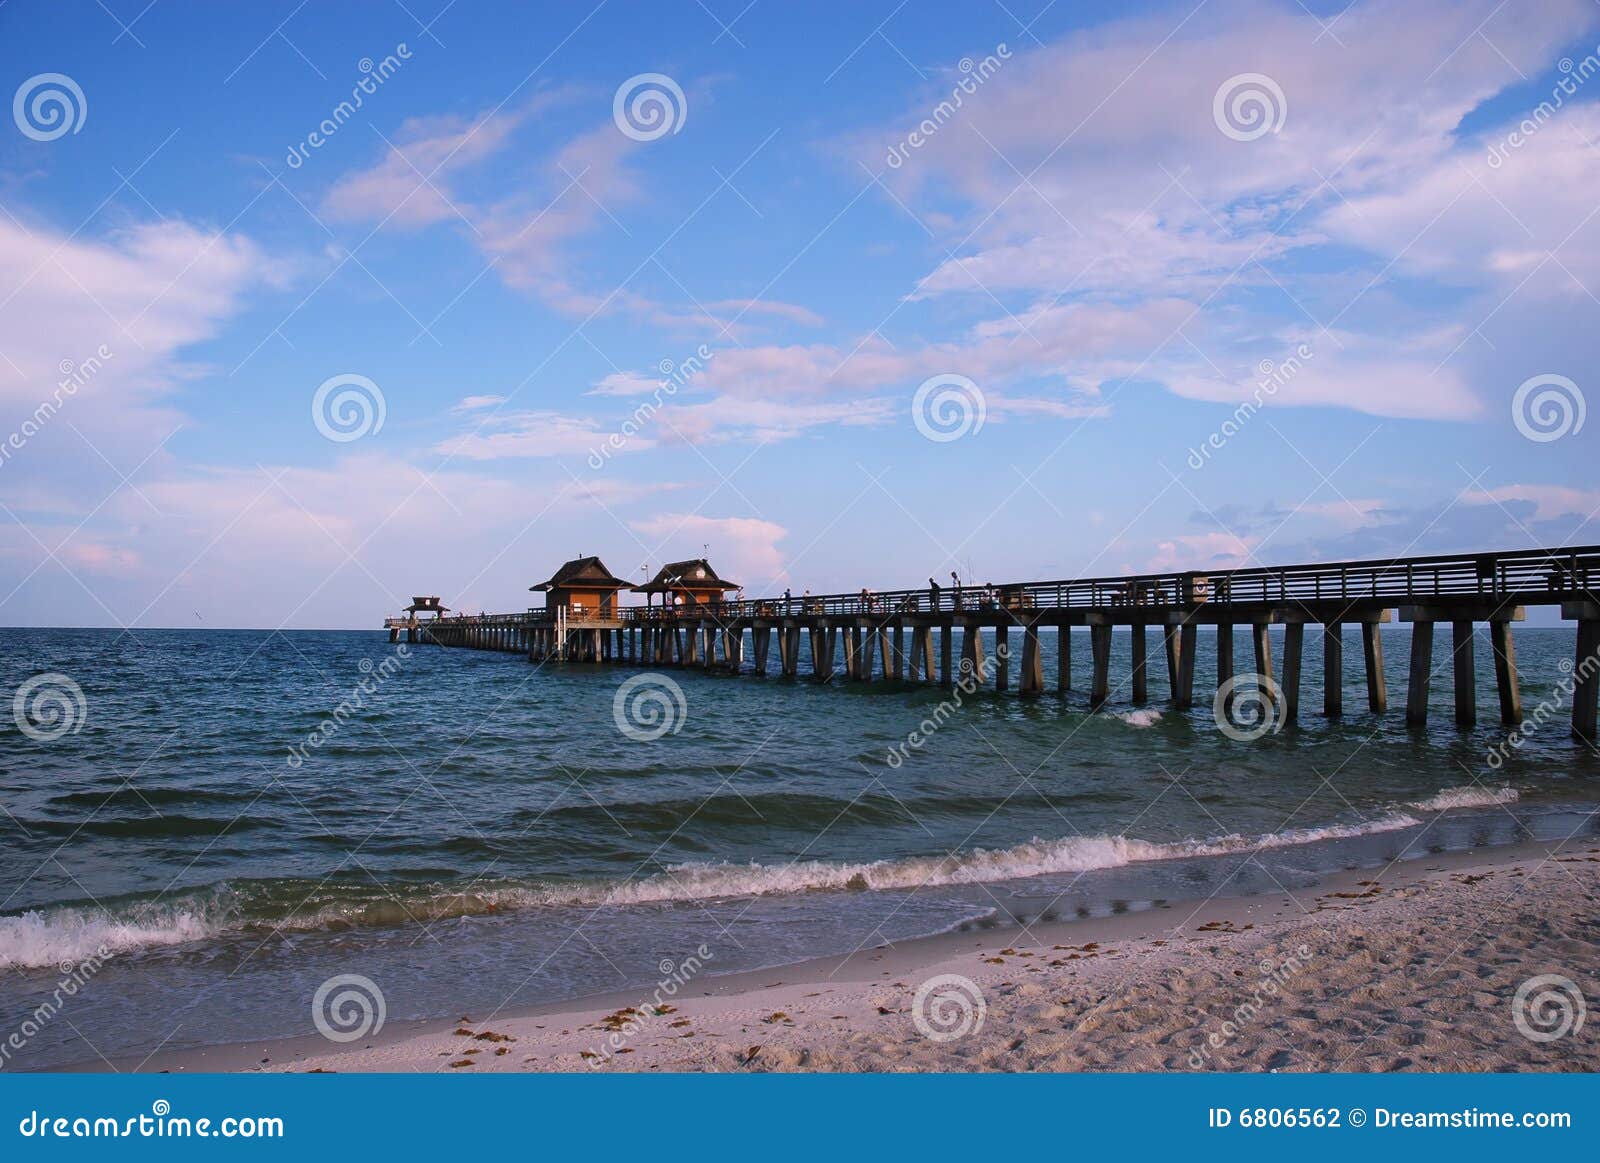 Fishing Pier At Naples Beach, Florida Stock Photography - Image ...